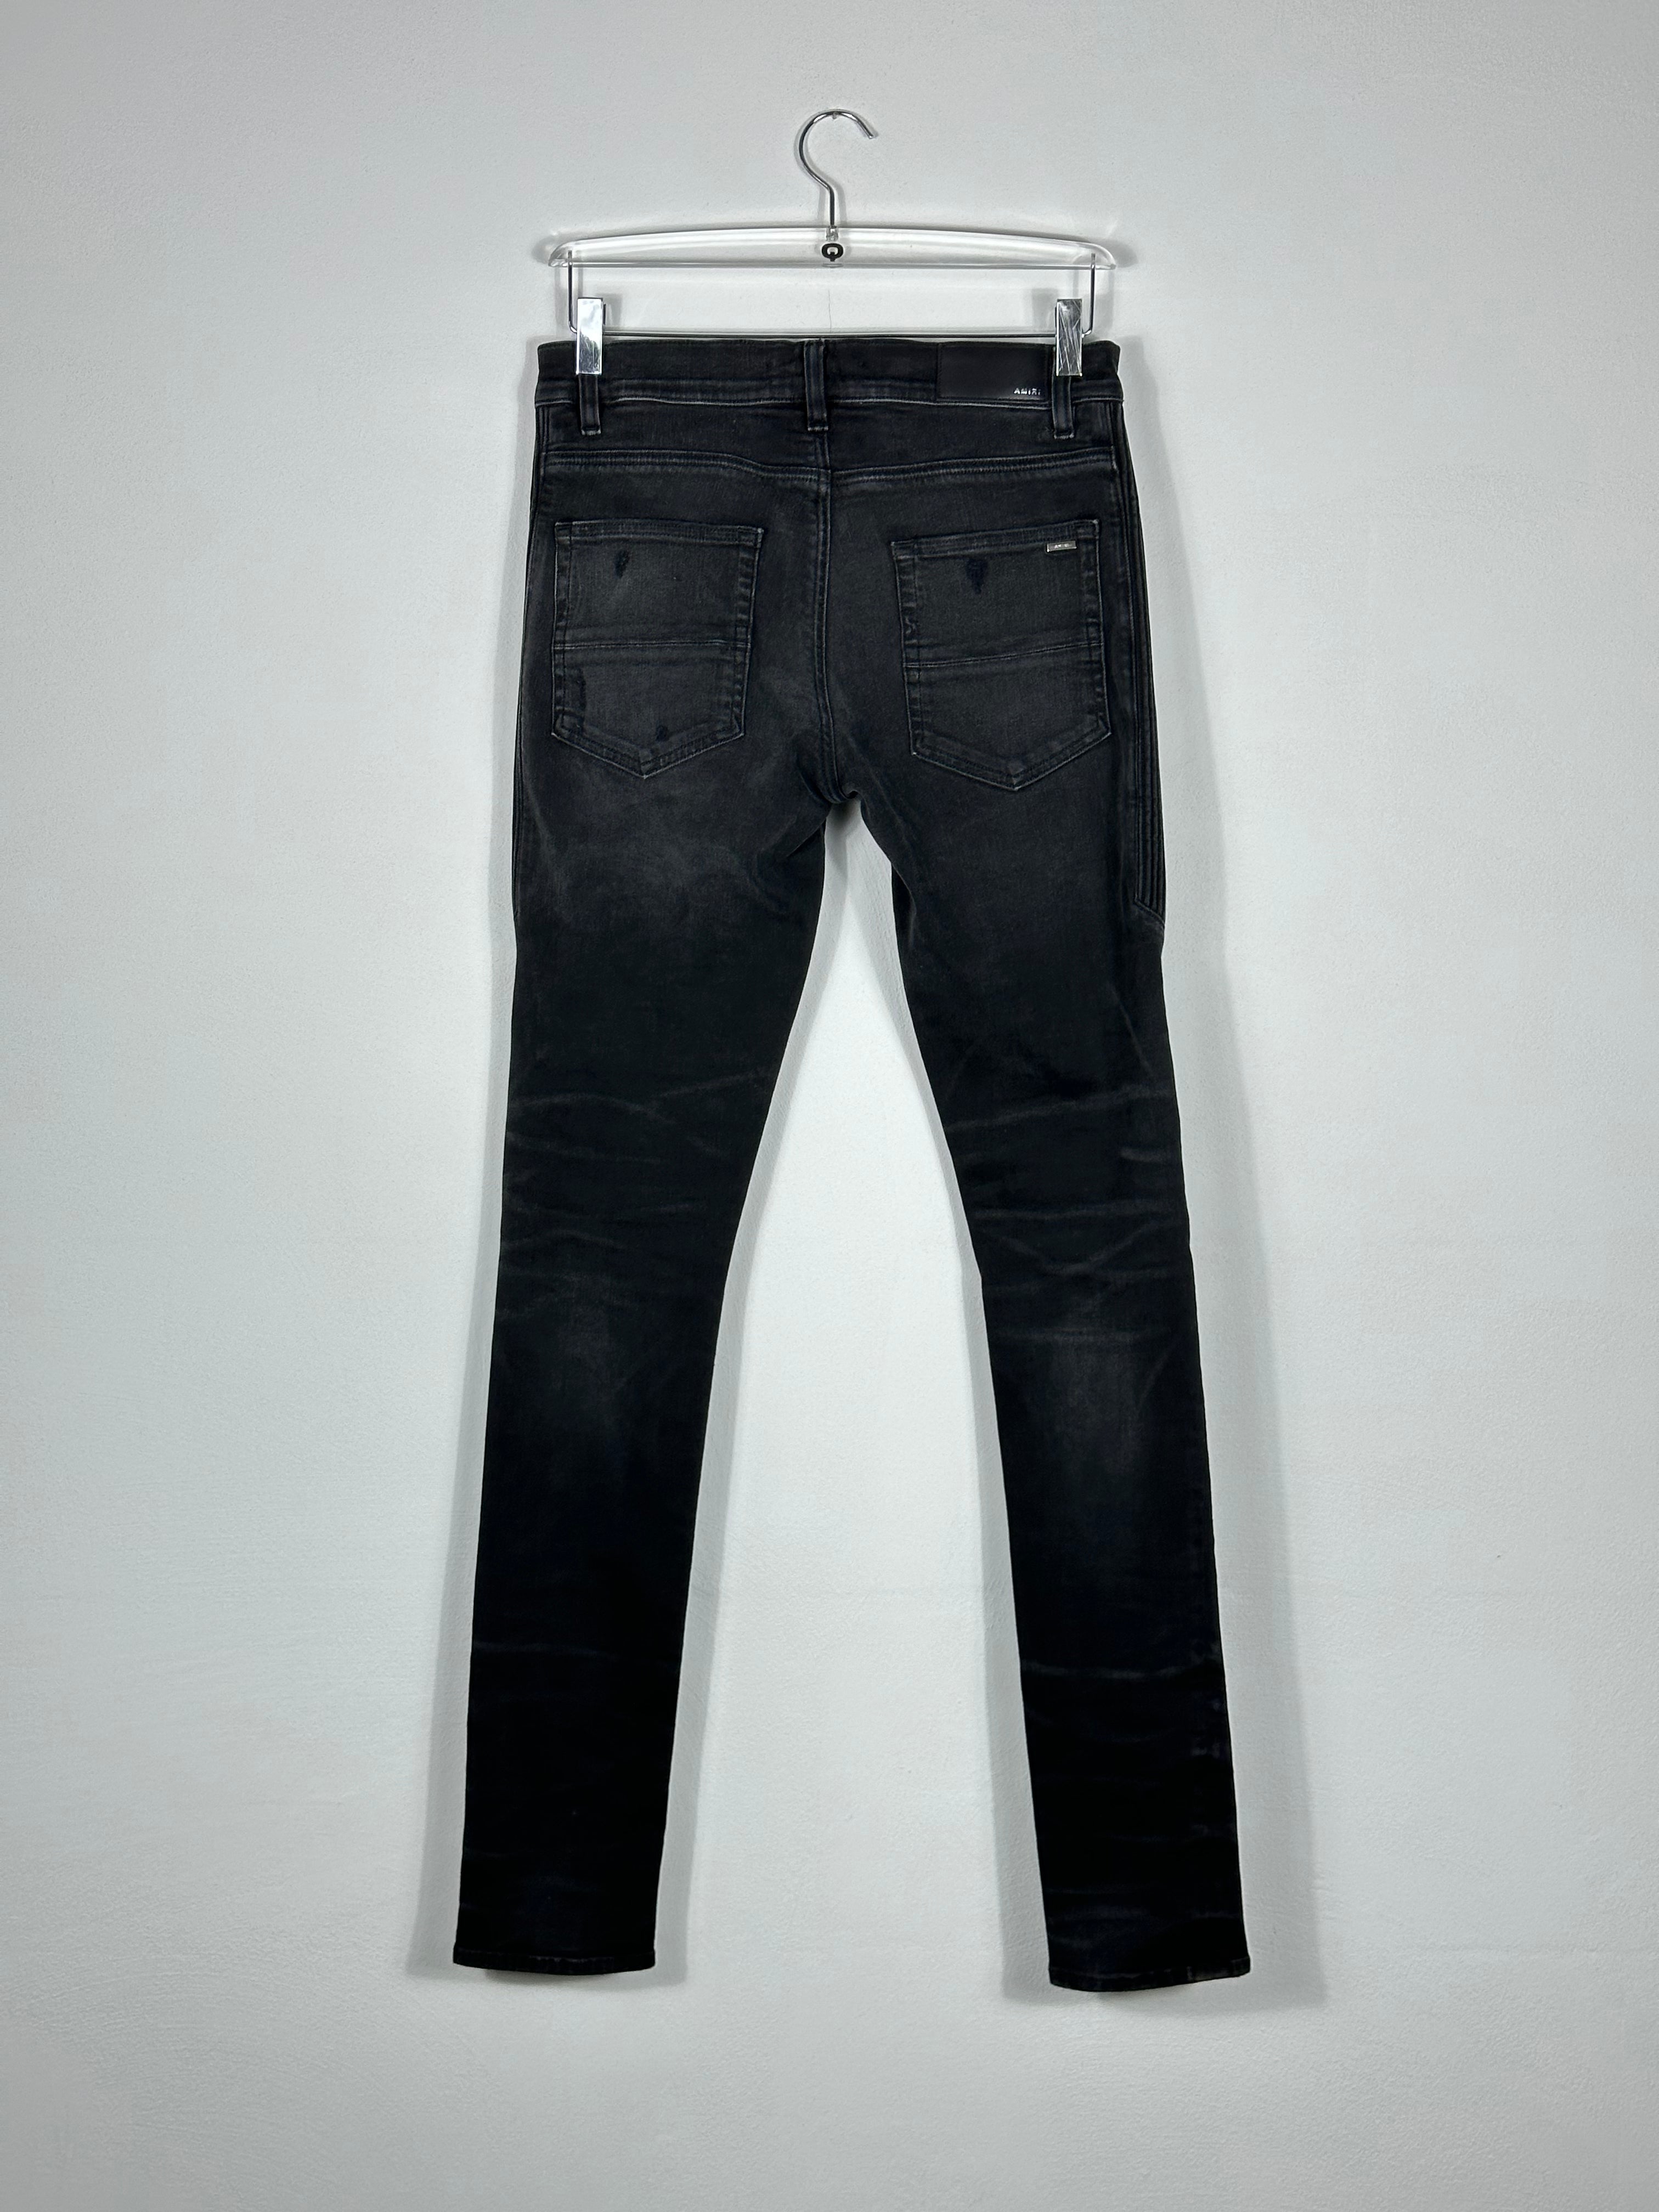 Zipper Jeans by Sfera Ebbasta